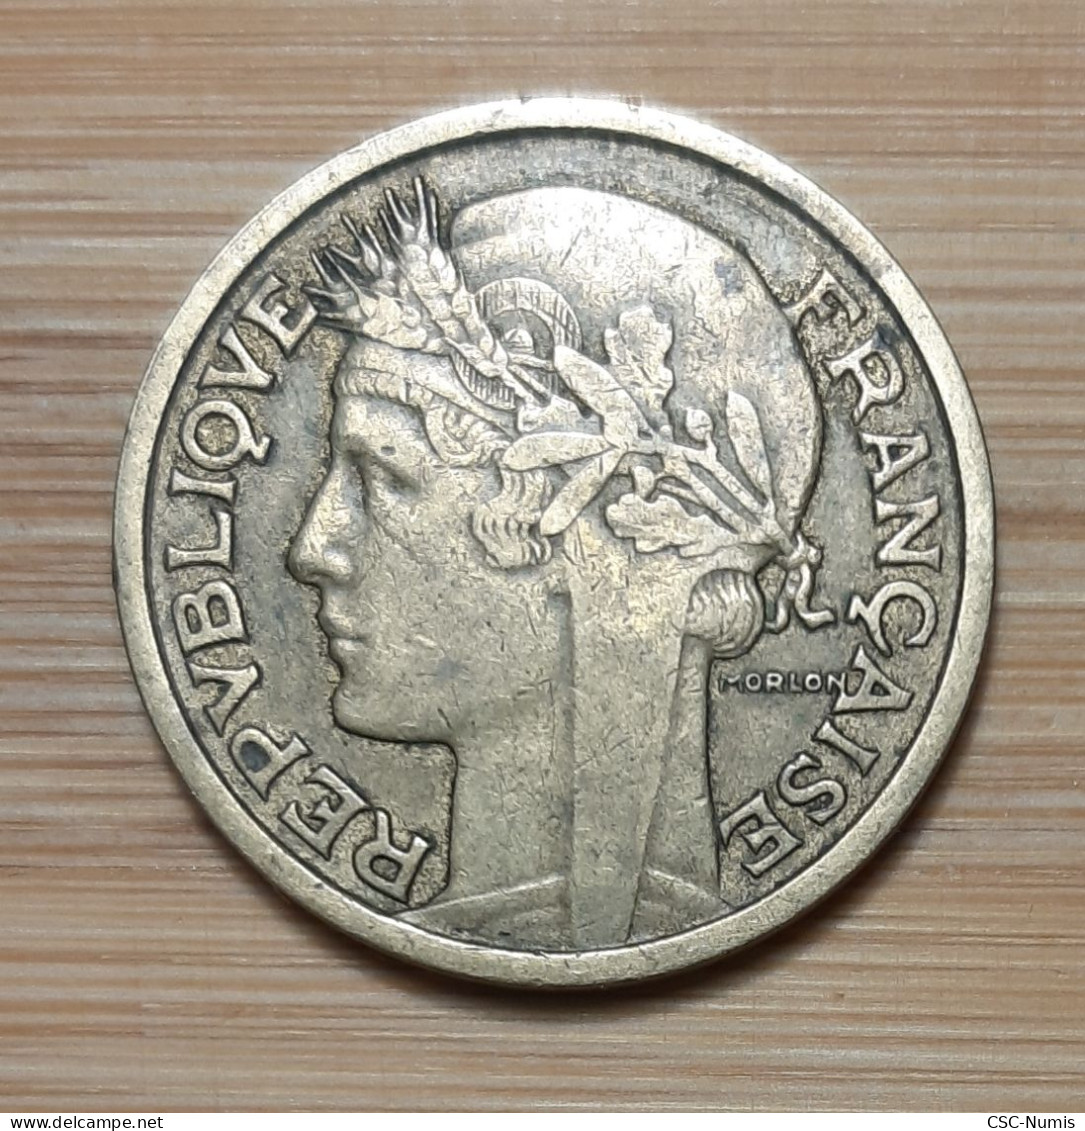 (N-0088) - IIIème République - 2 Francs 1940 – Morlon - 2 Francs